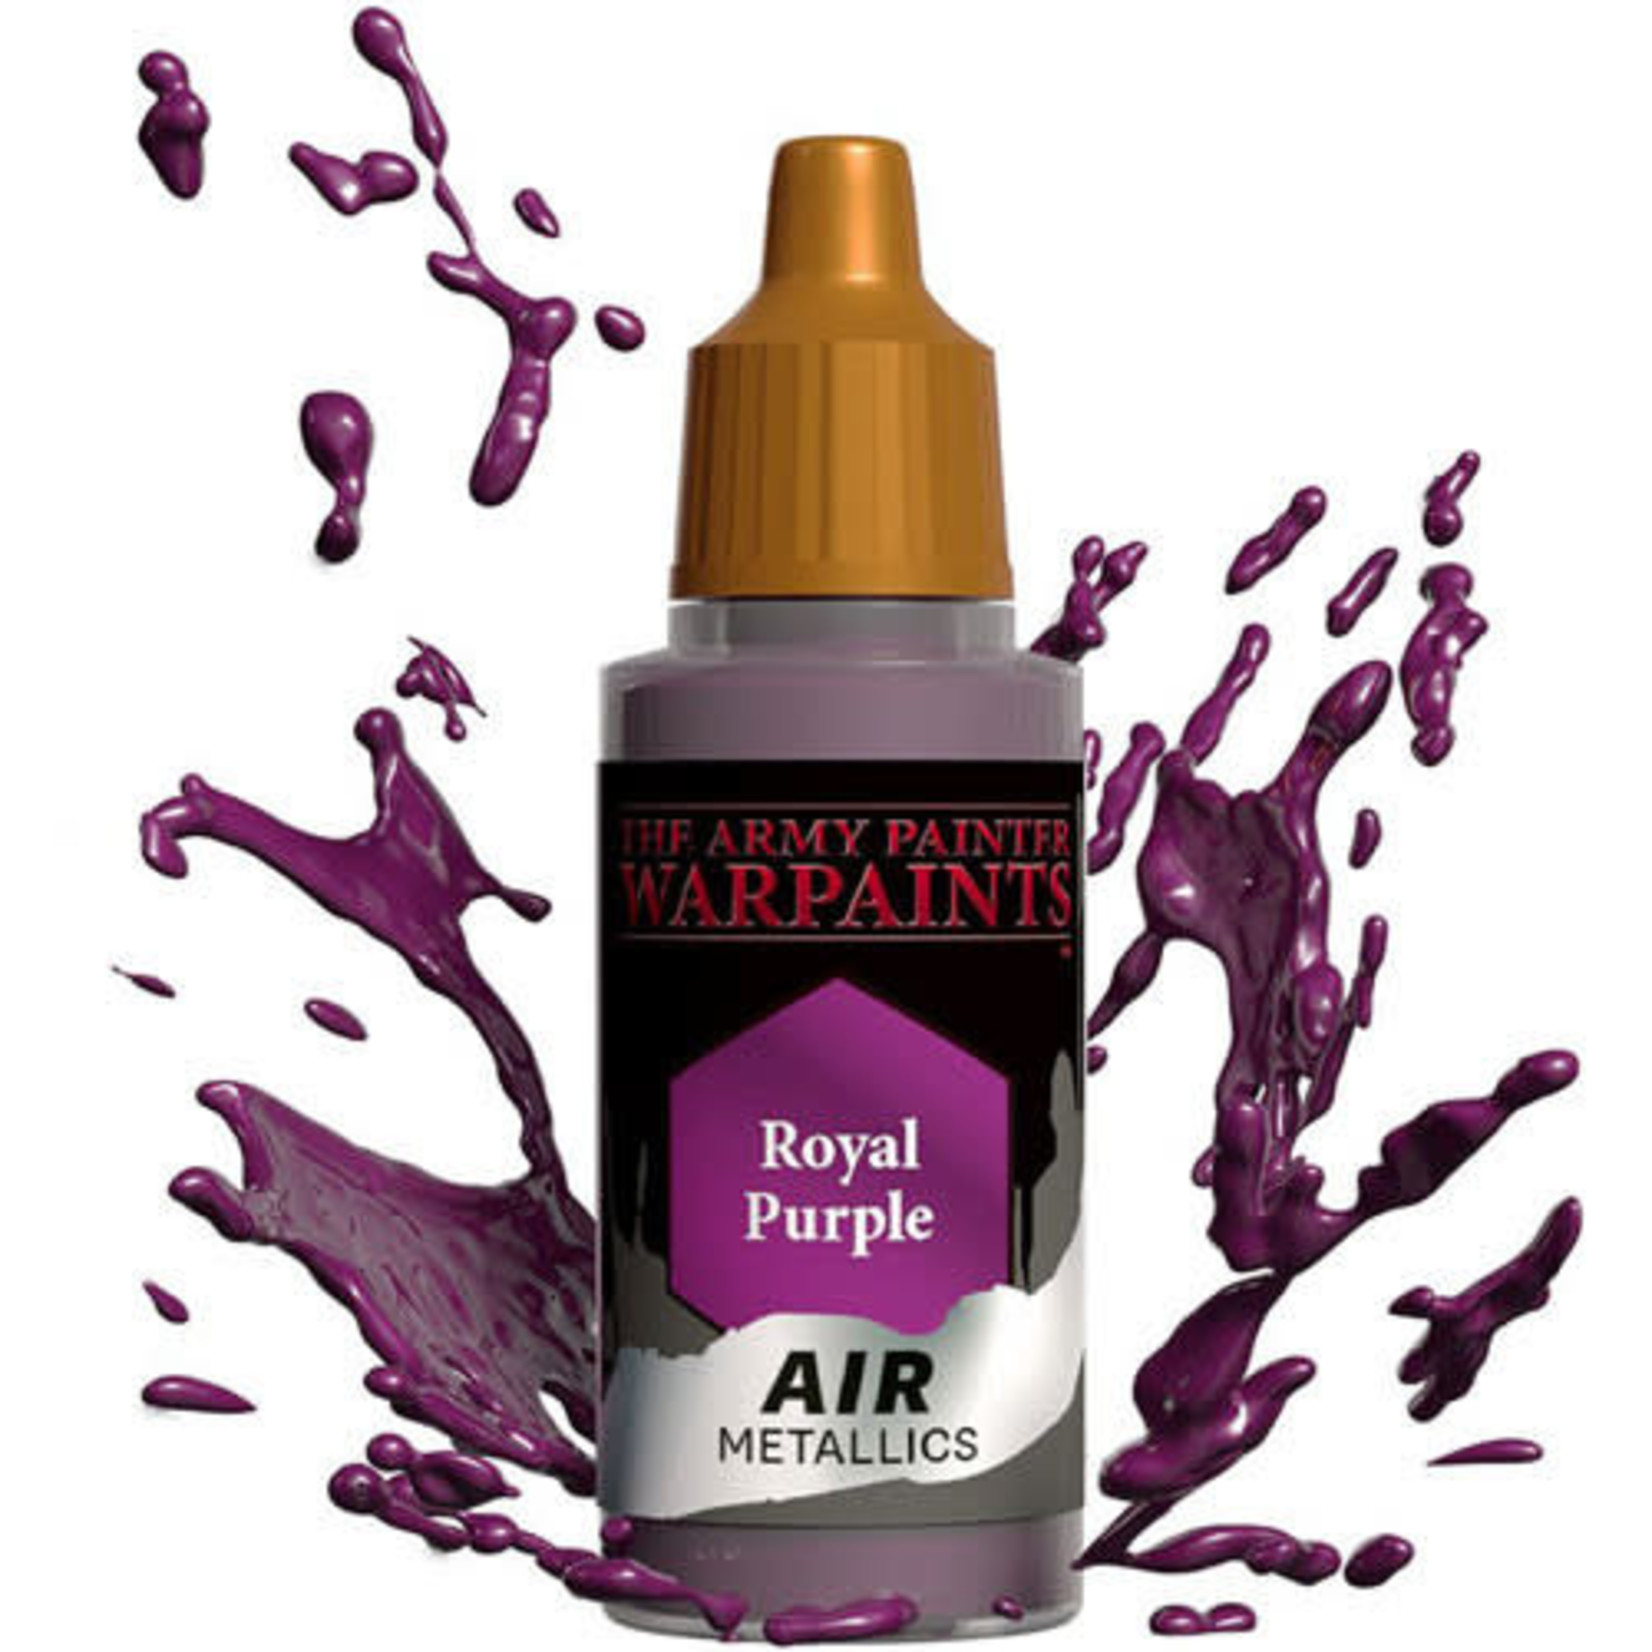 Army Painter Warpaints Air: Royal Purple 18ml